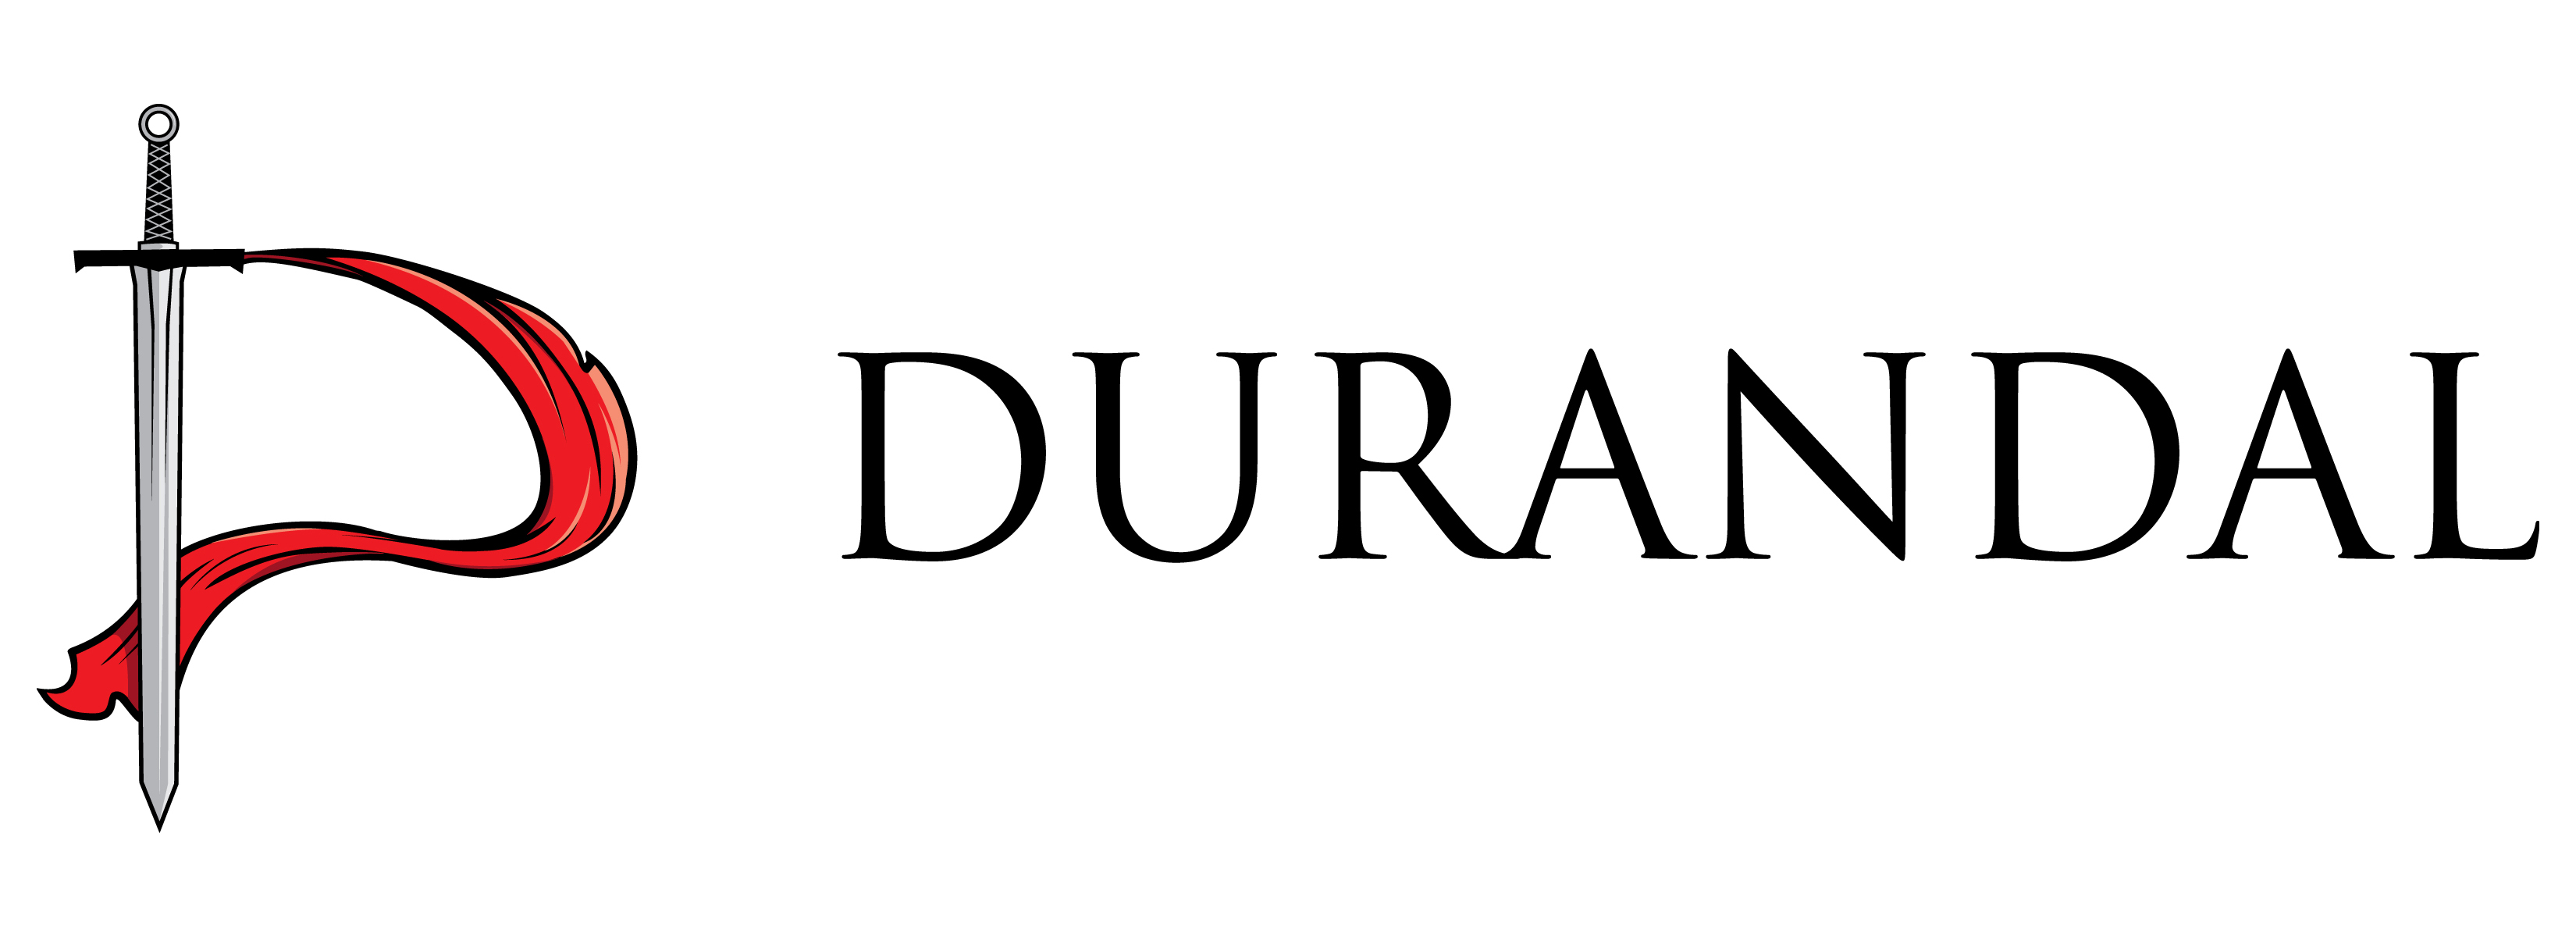 Durandal font